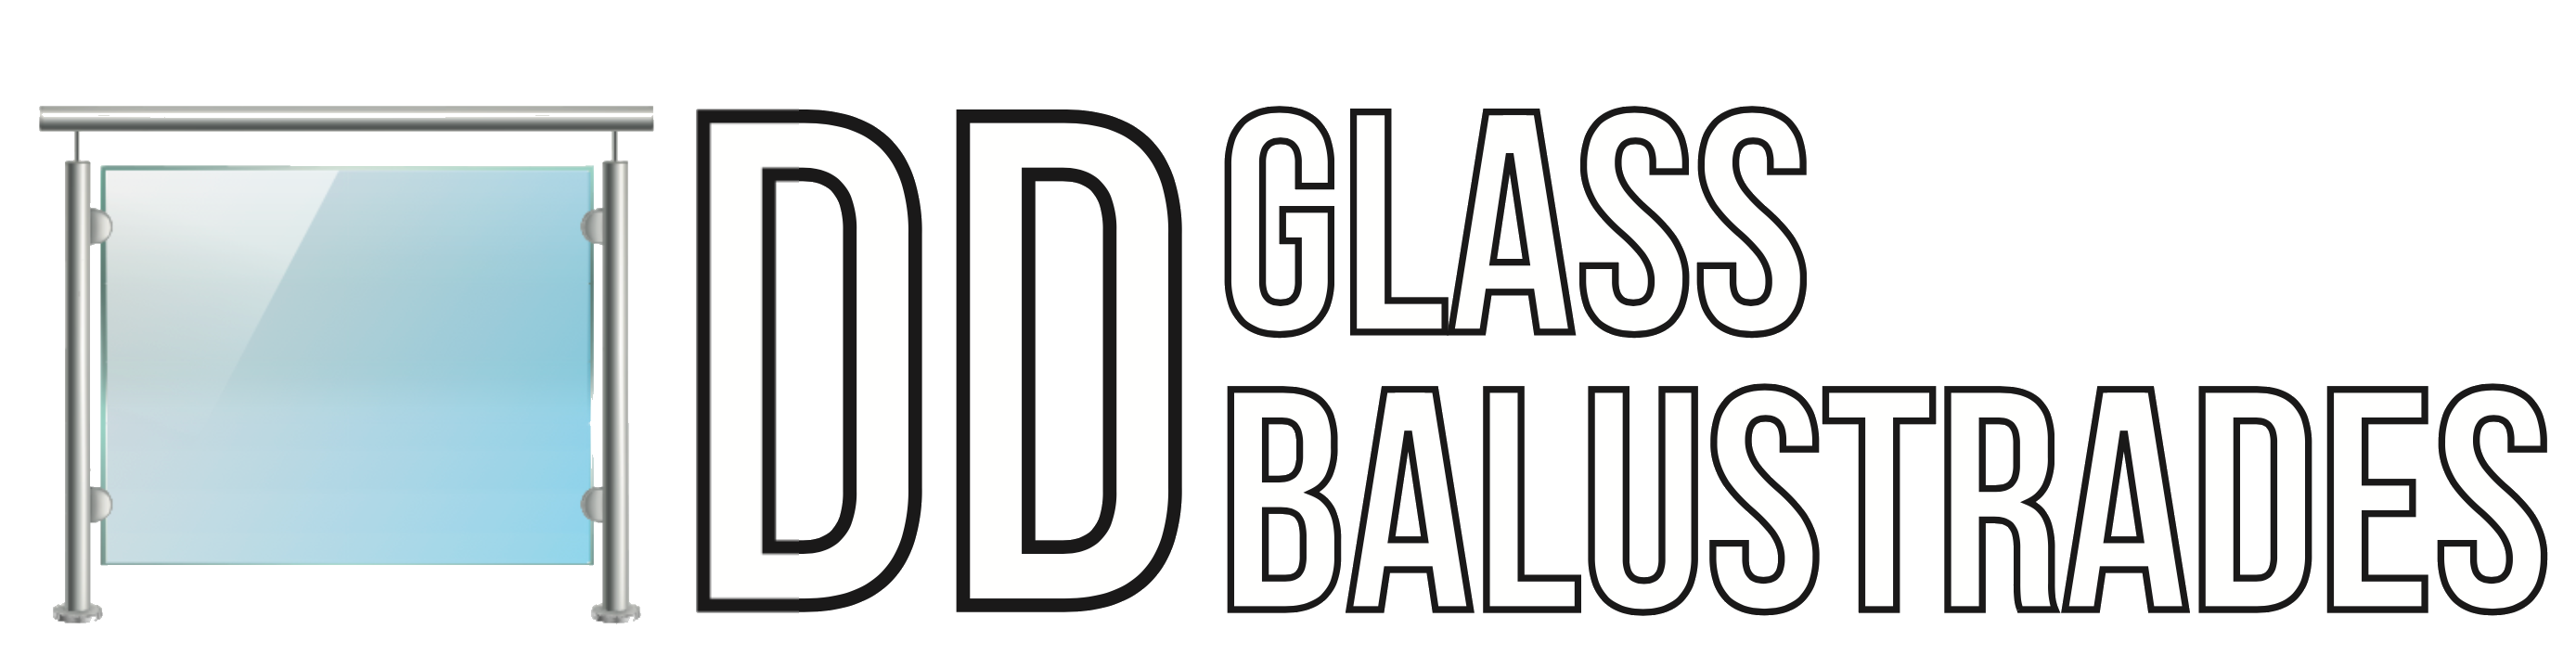 DD Glass Balustrades Fully logo